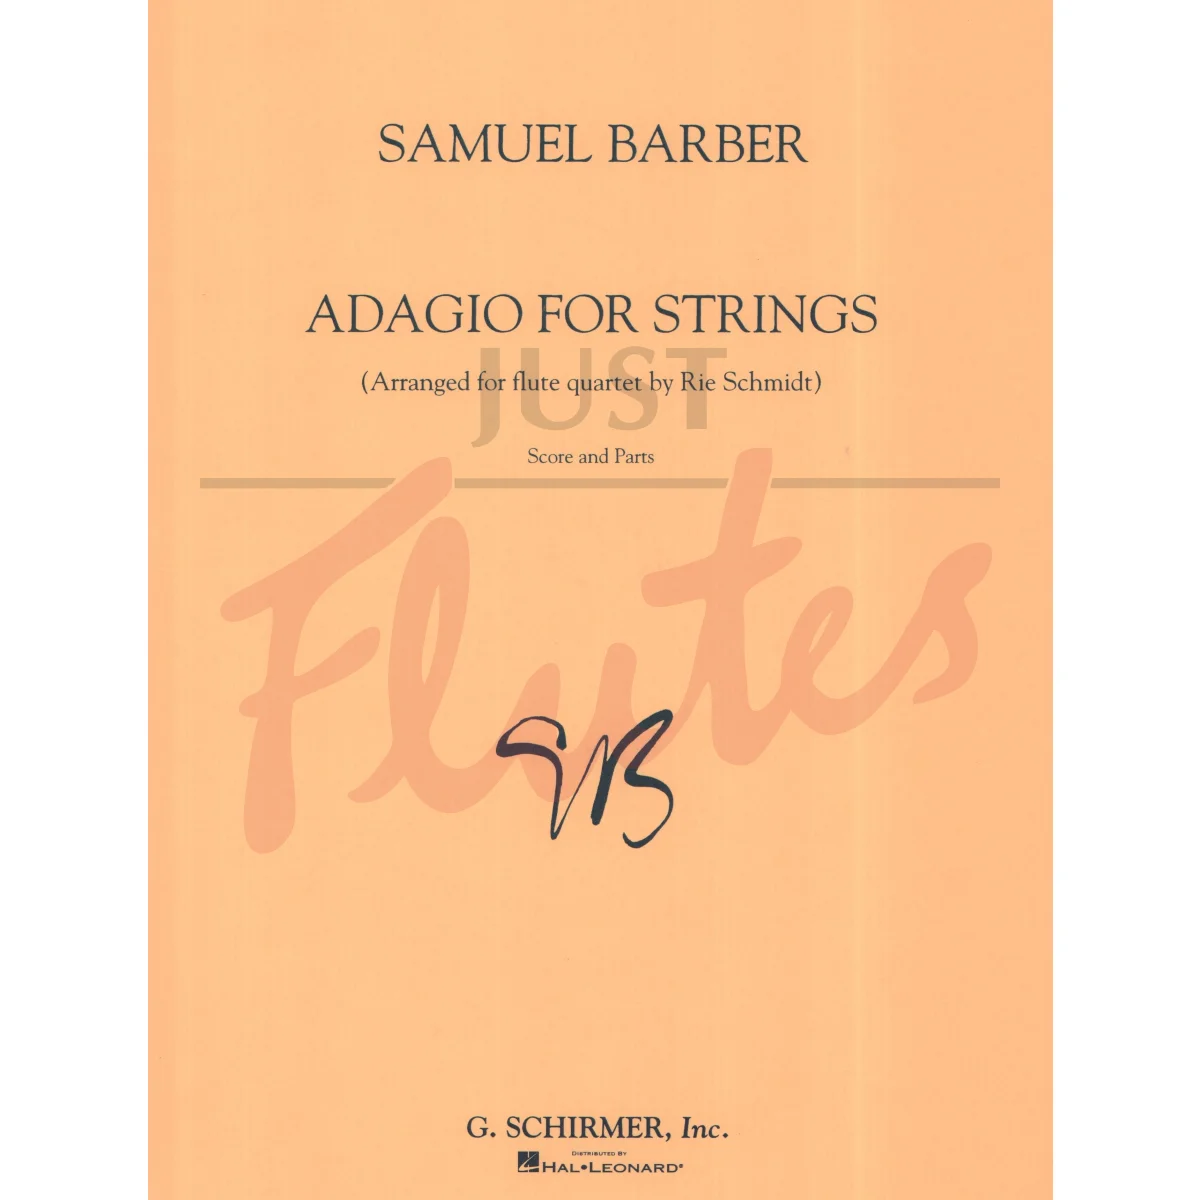 Adagio for Strings arranged for Flute Quartet